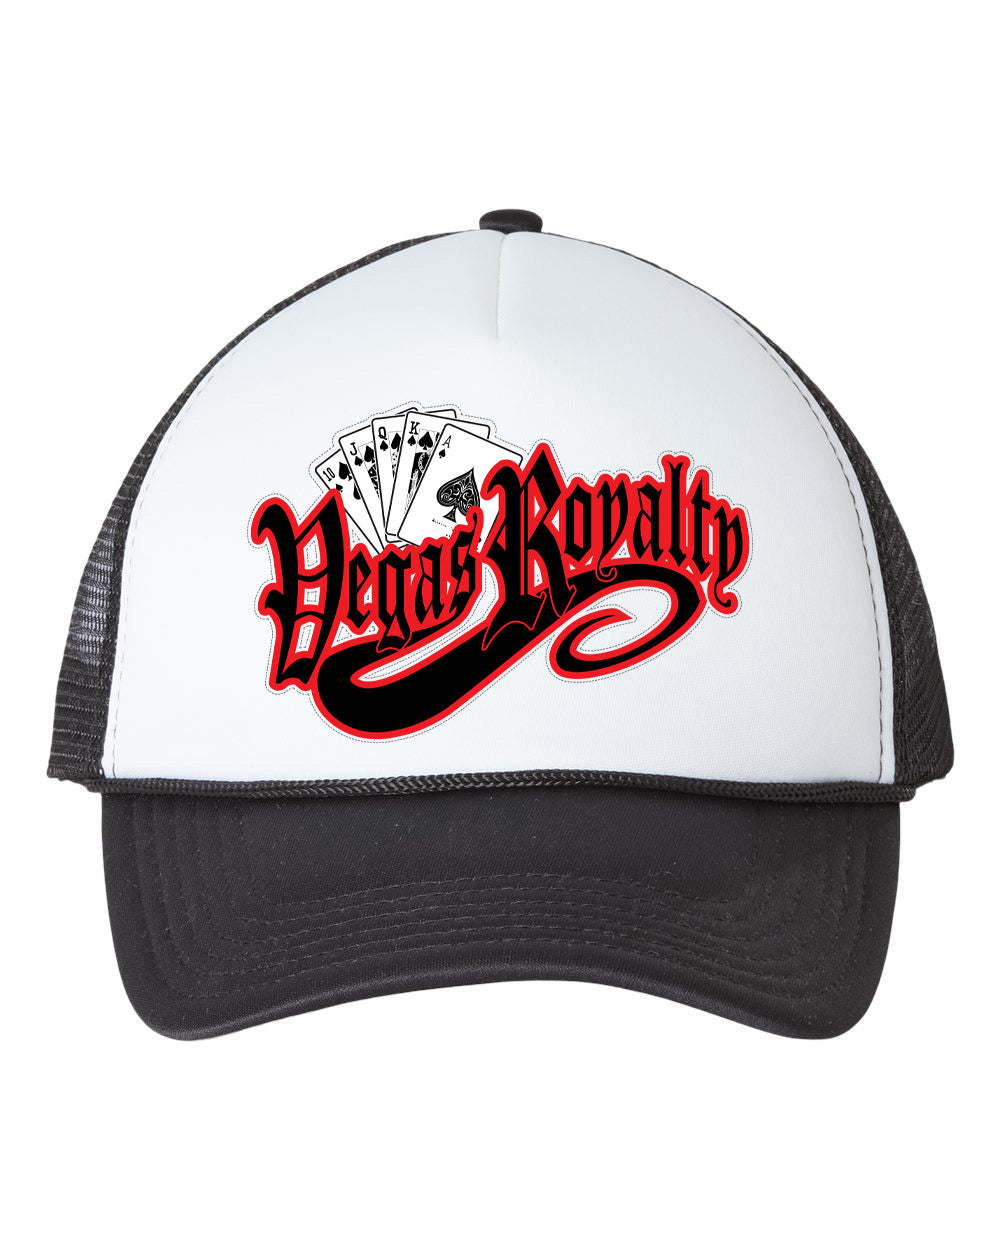 Vegas Royalty High Roller Foam Trucker Hat With Curved Visor